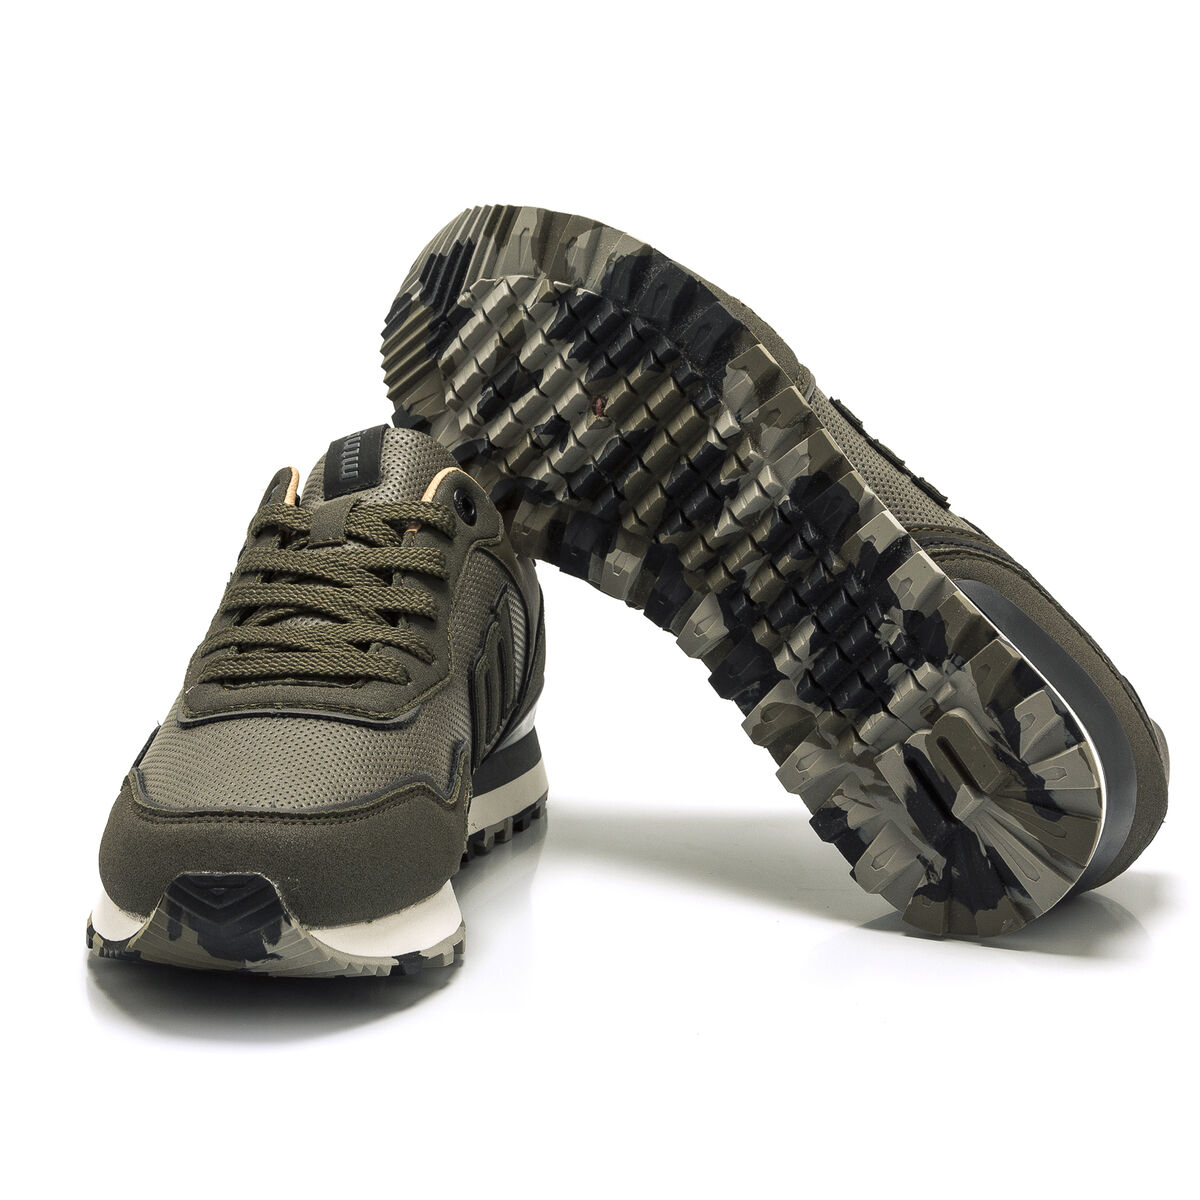 Sneakers de Homem modelo PORLAND de MTNG image number 3